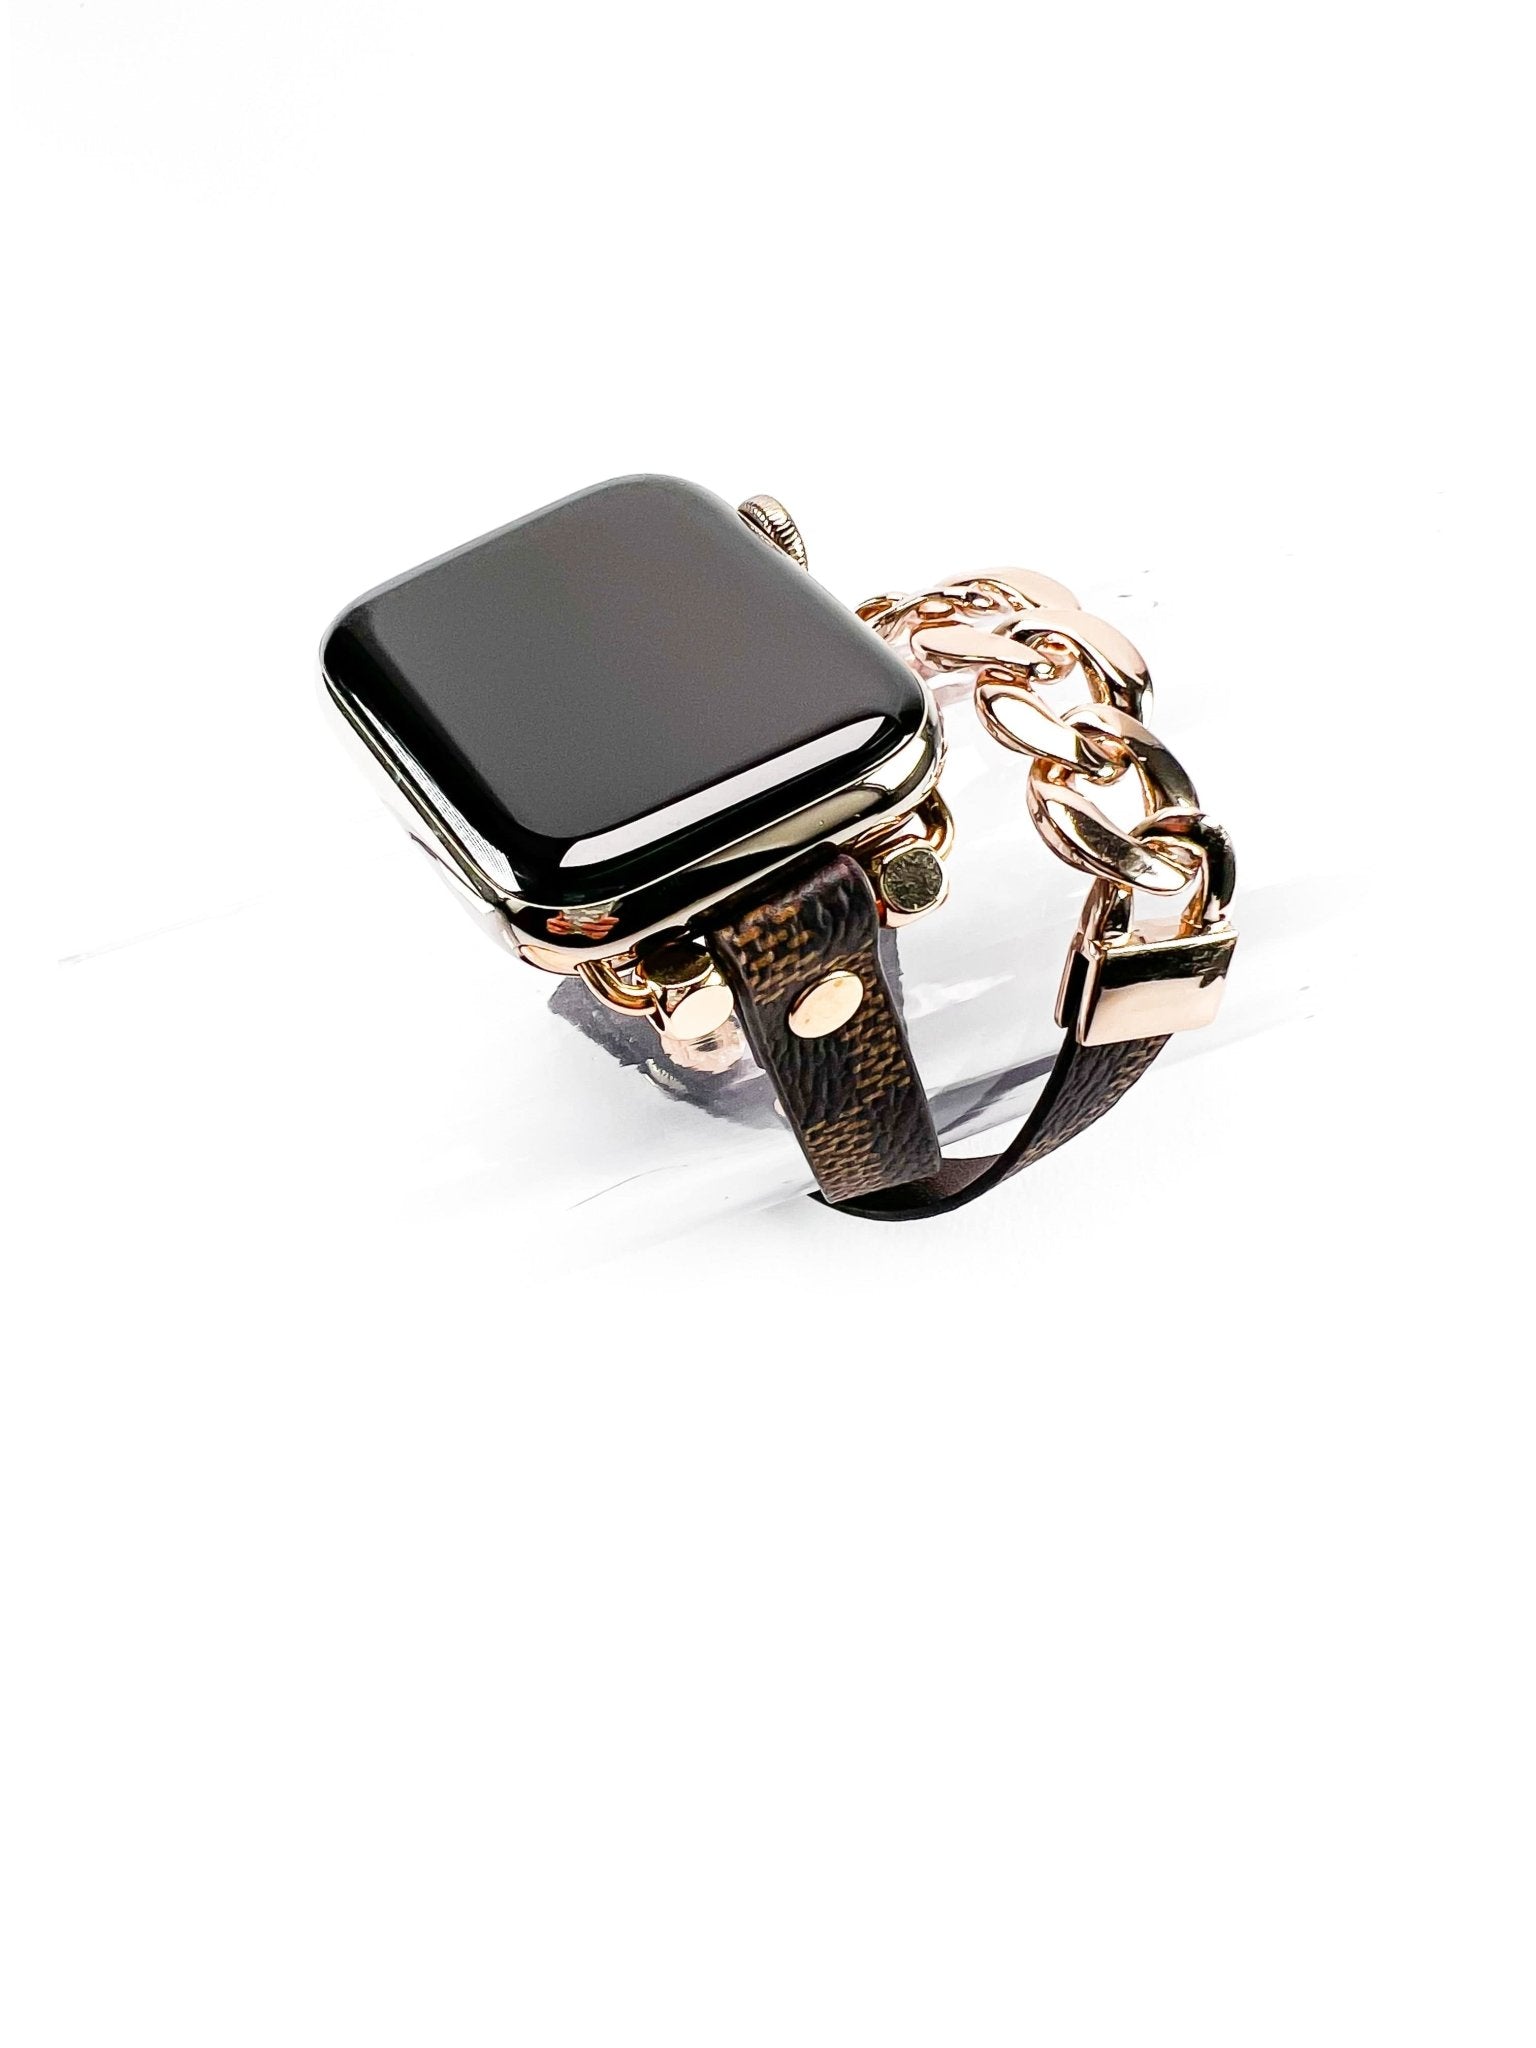 Posh Checker Leather Wrap Bracelet Gold Chain Band - Mareevo